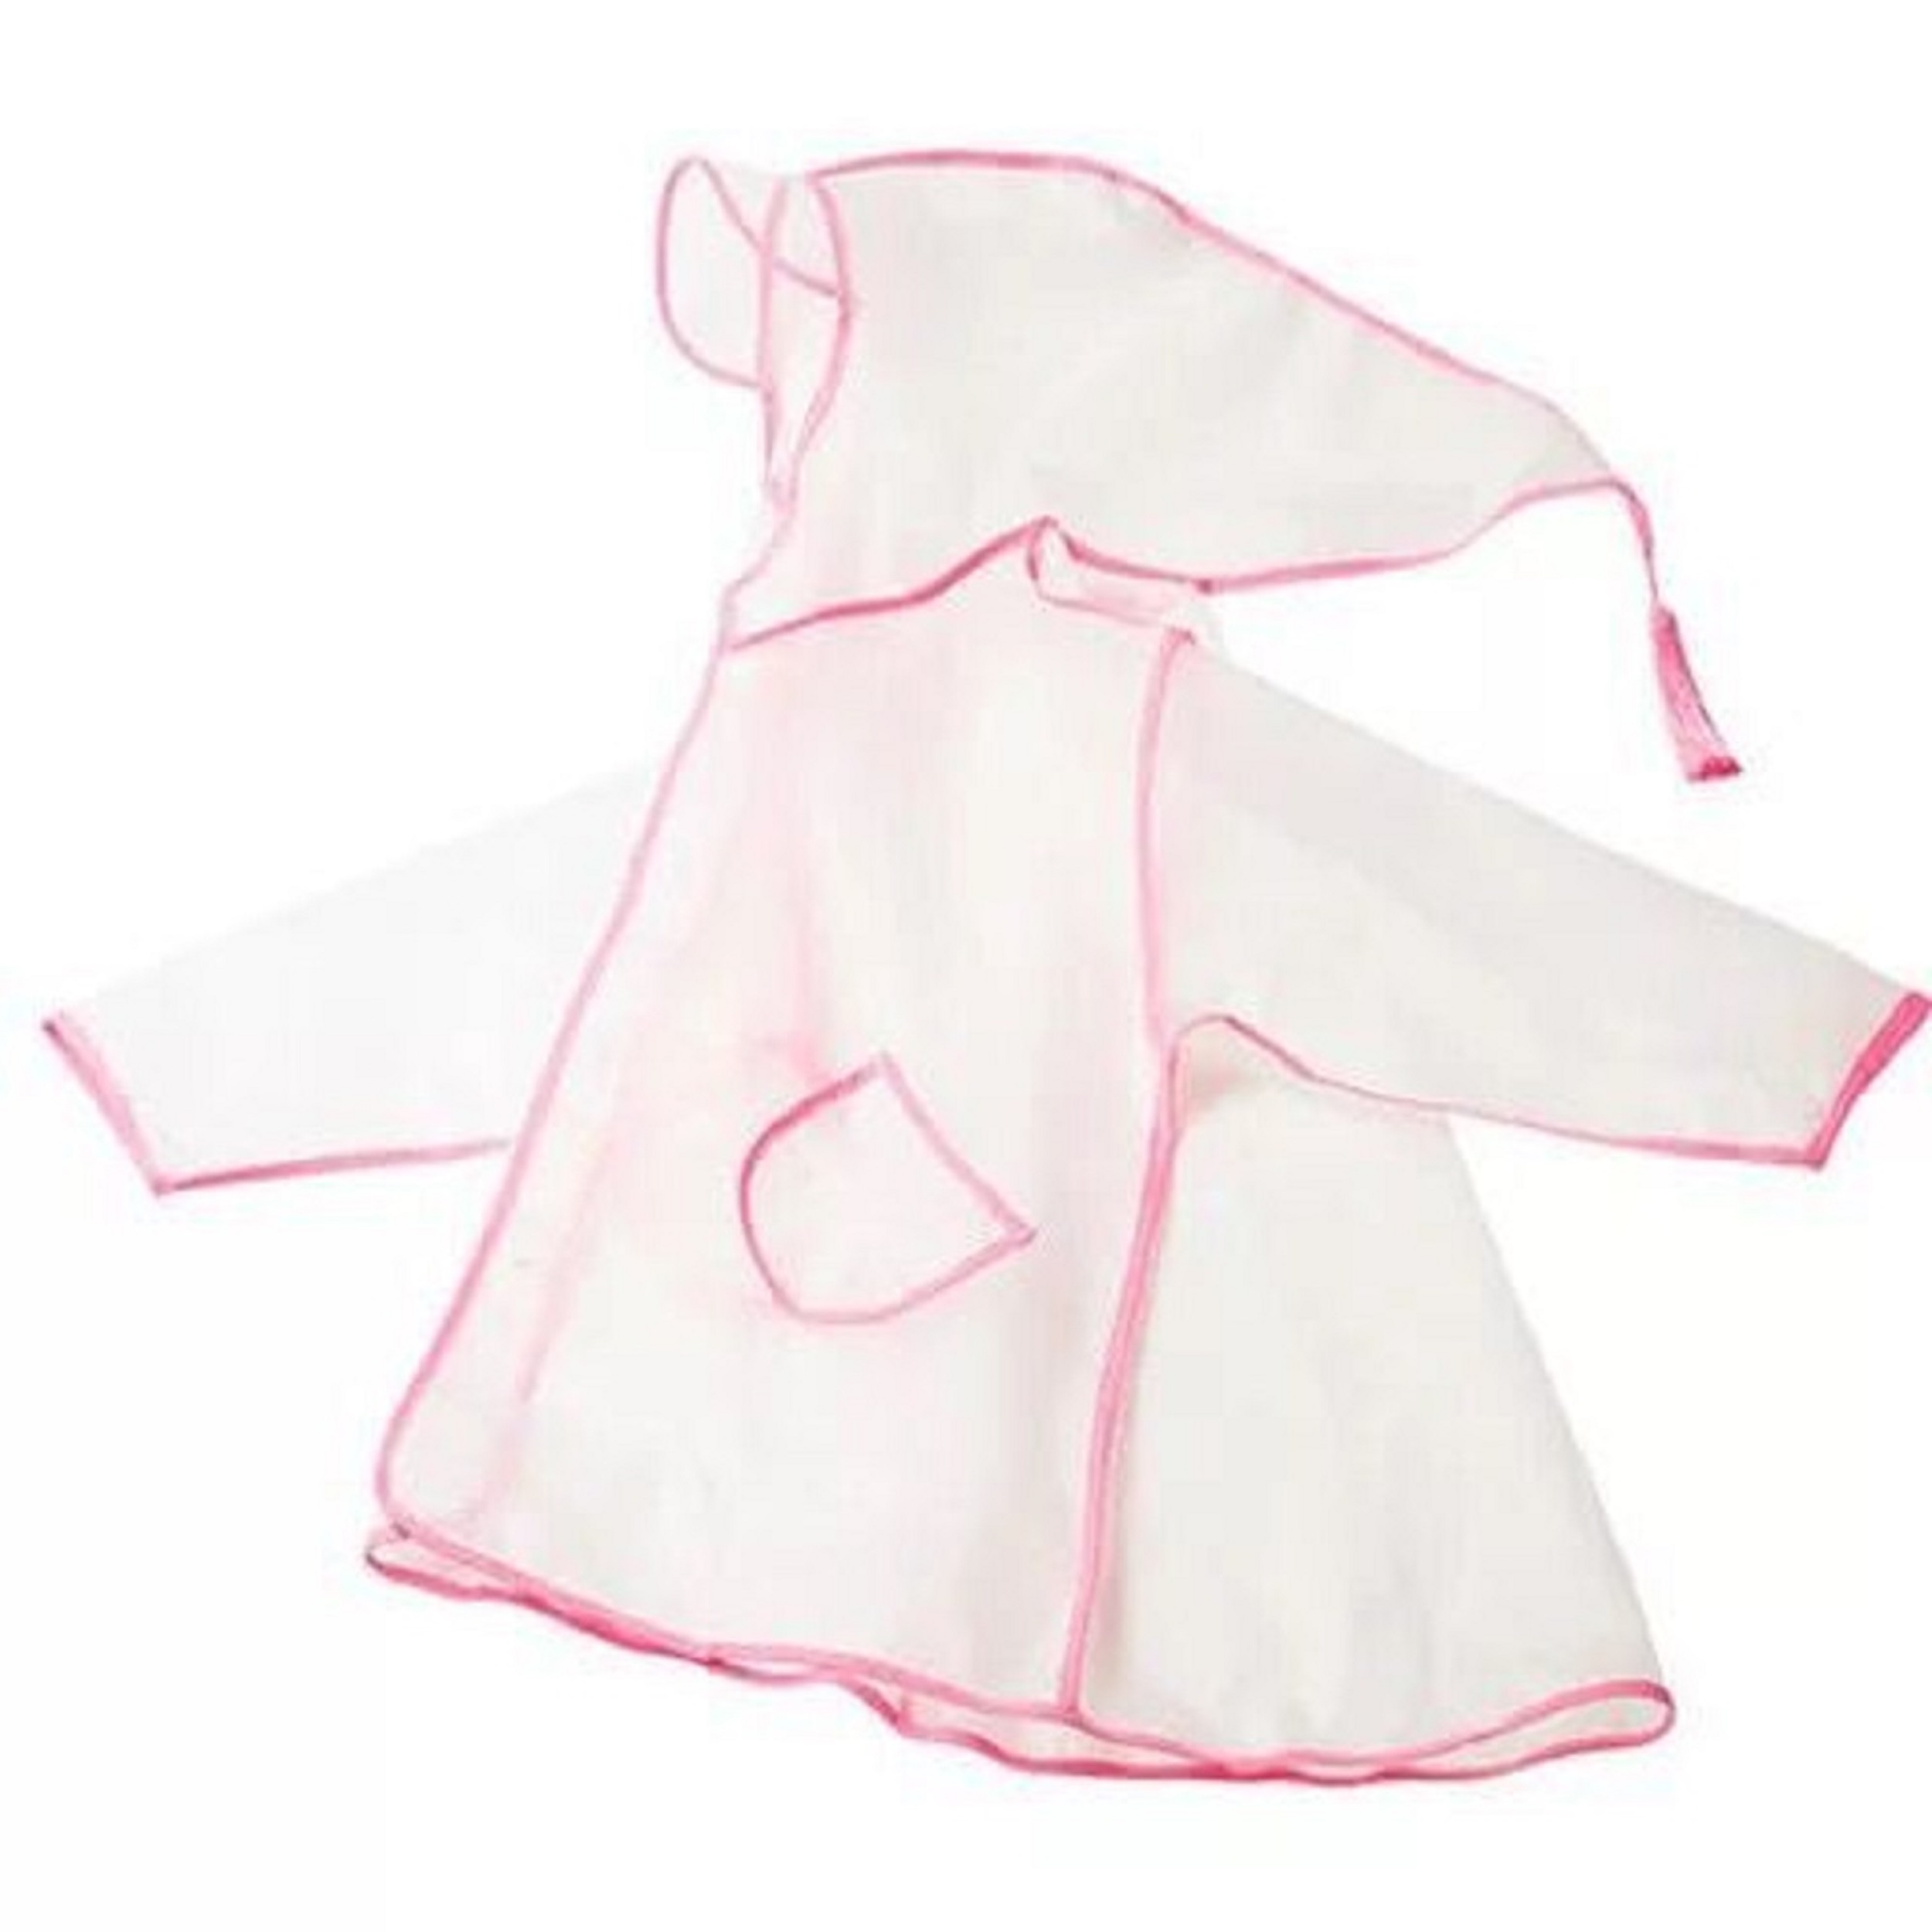 LIONVI Kids Raincoat,Durable Translucent Rain Cape,Portable Hooded Poncho for Boys Girls